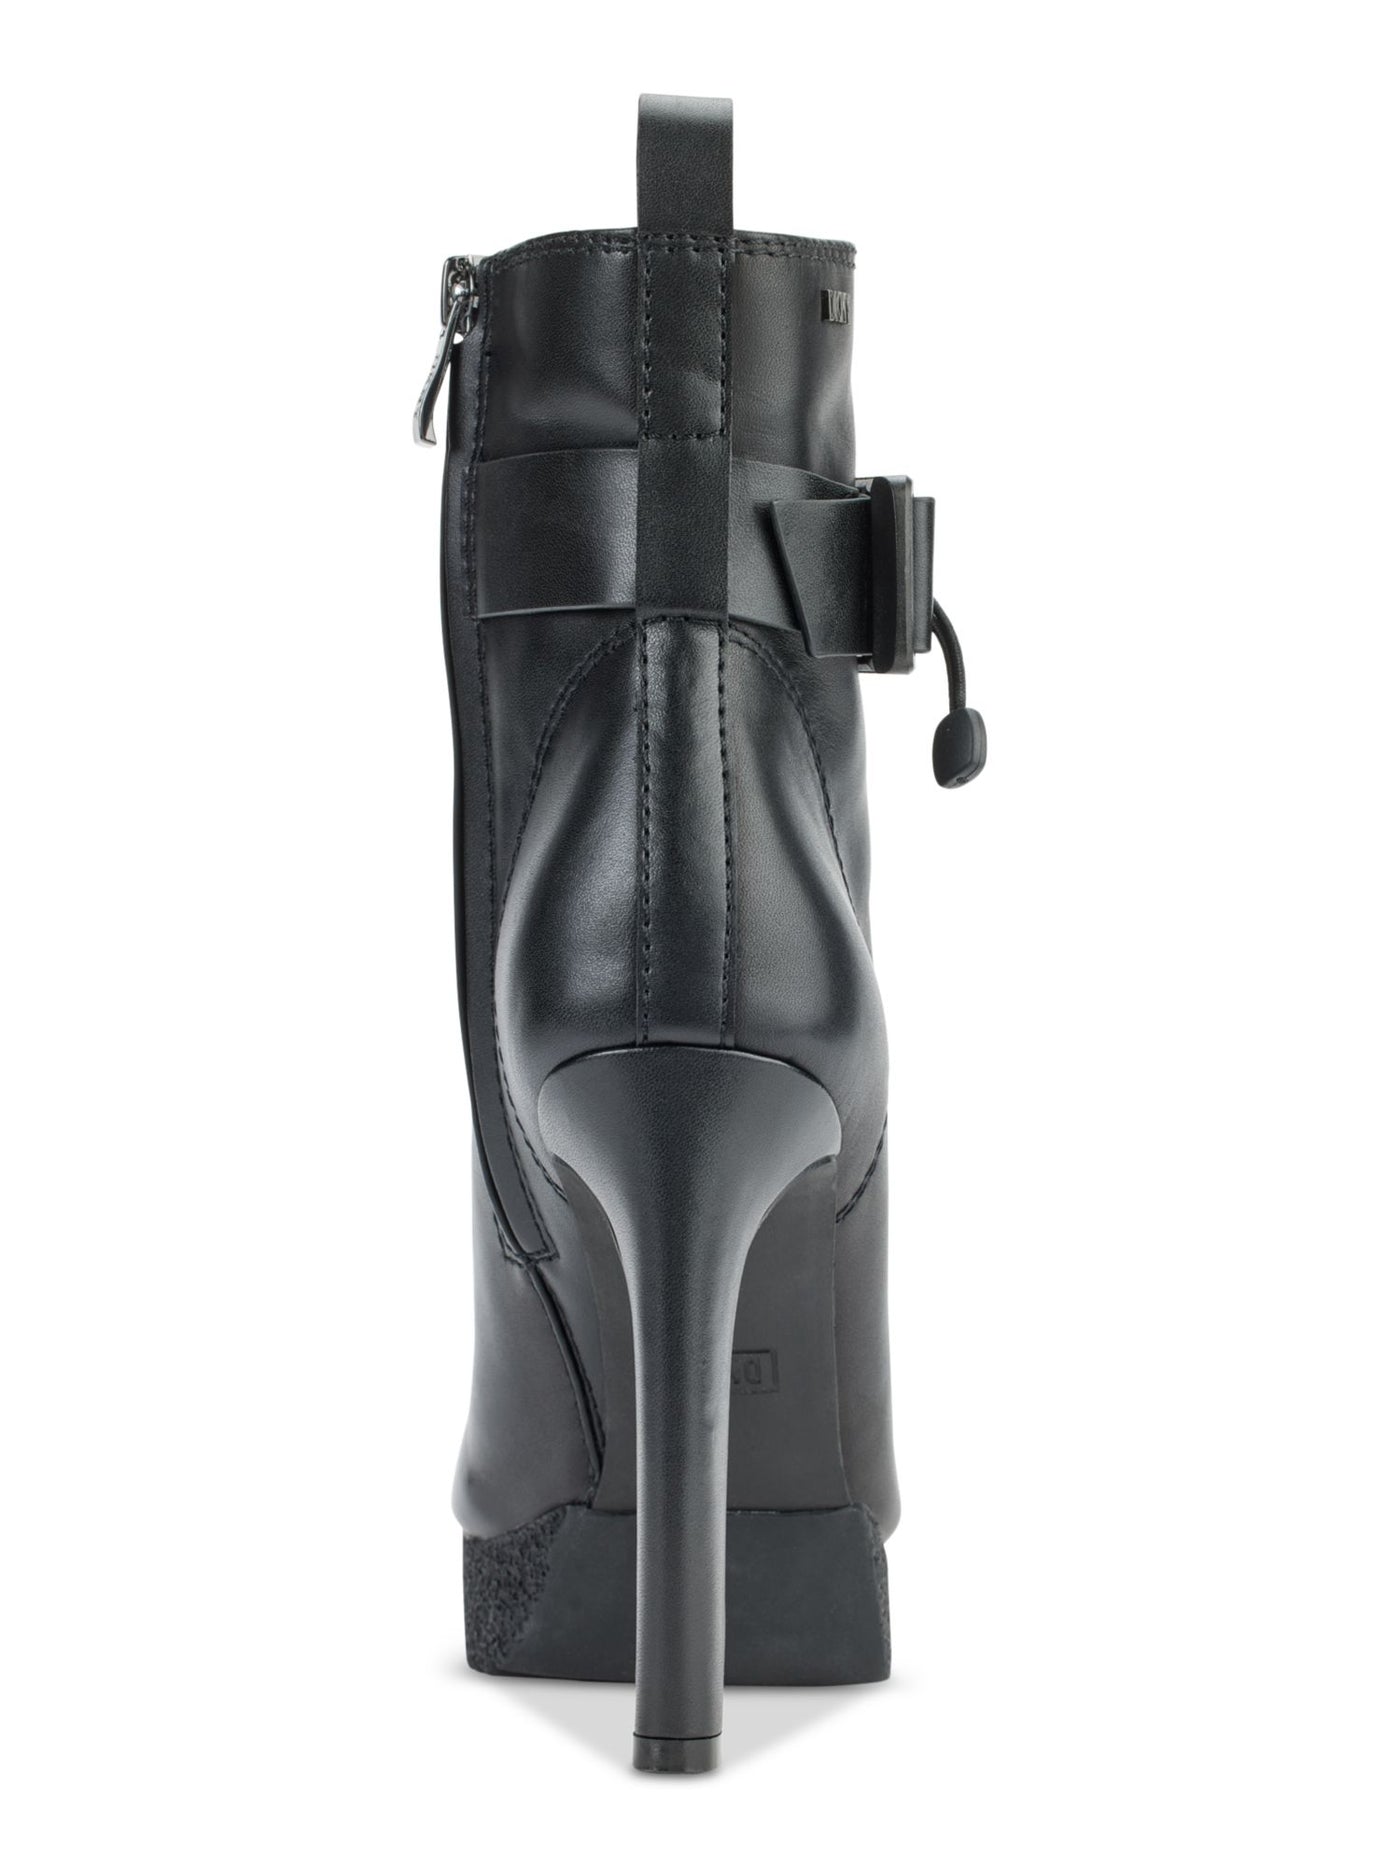 DKNY Womens Black 1" Platform Pull Tab Buckle Accent Zana Square Toe Block Heel Zip-Up Leather Dress Booties 8.5 M